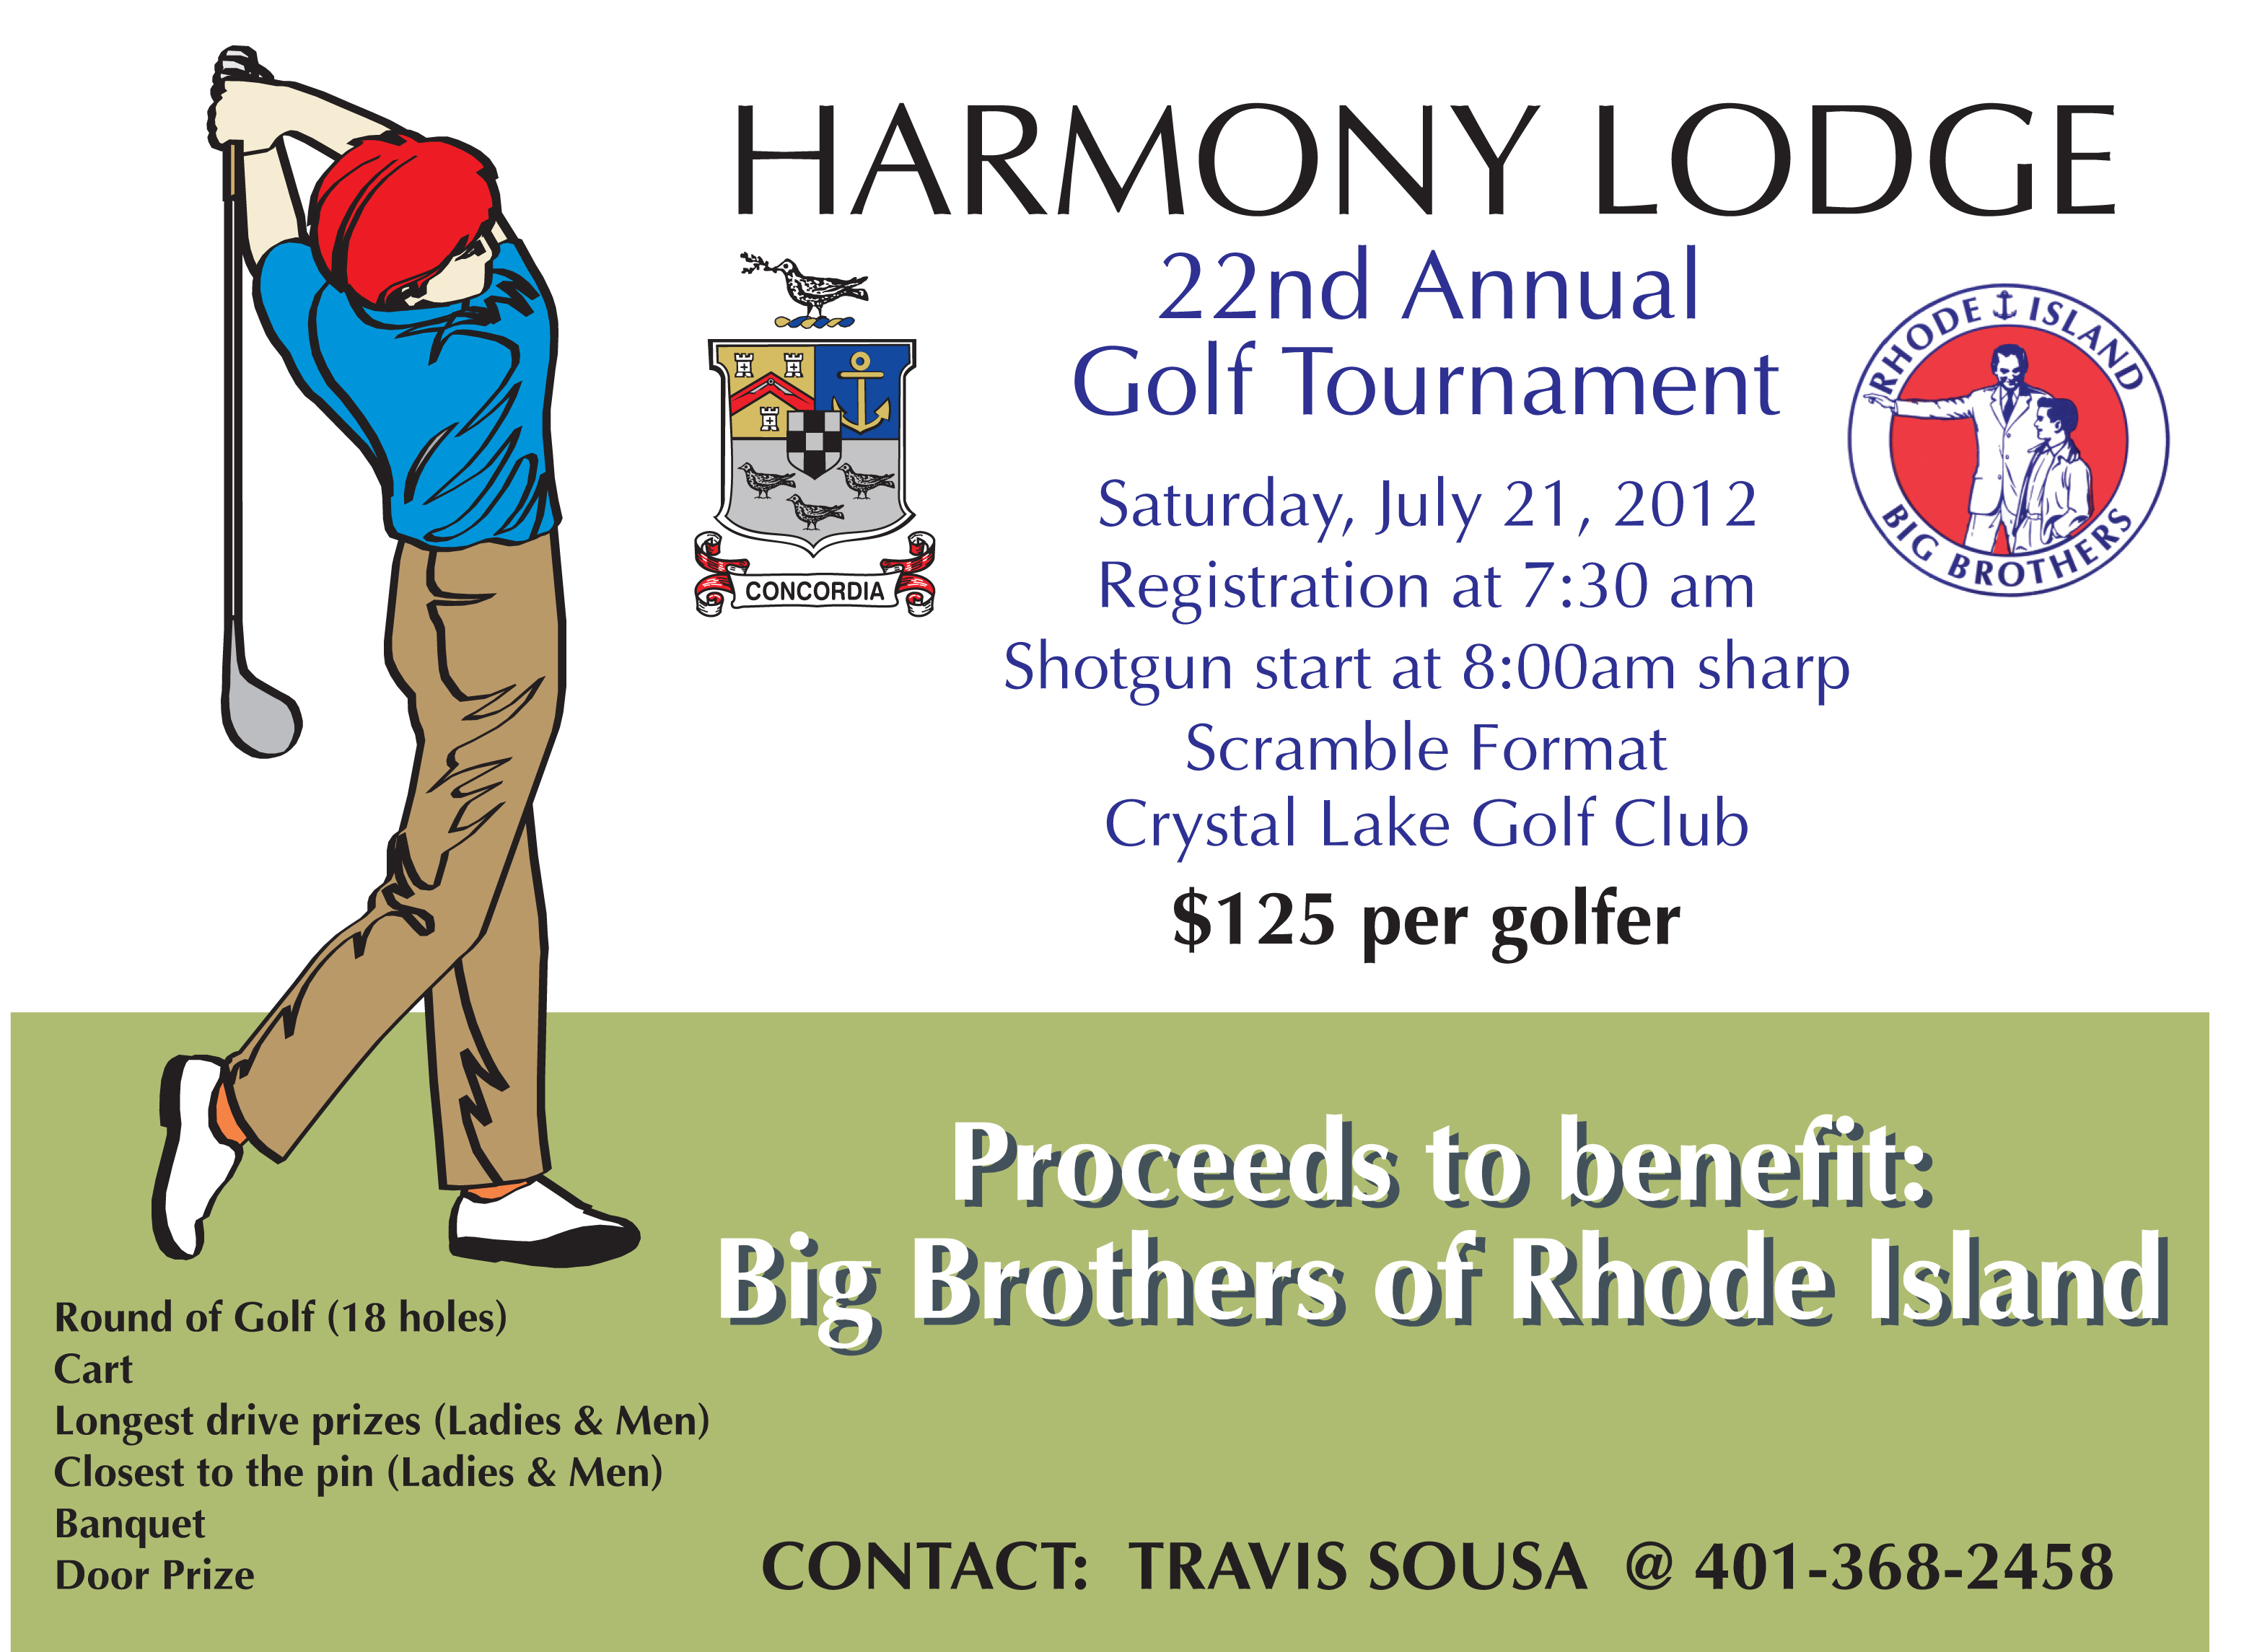 Harmony Lodge 22nd Annual Golf Tournament – Saturday, July 21, 2012